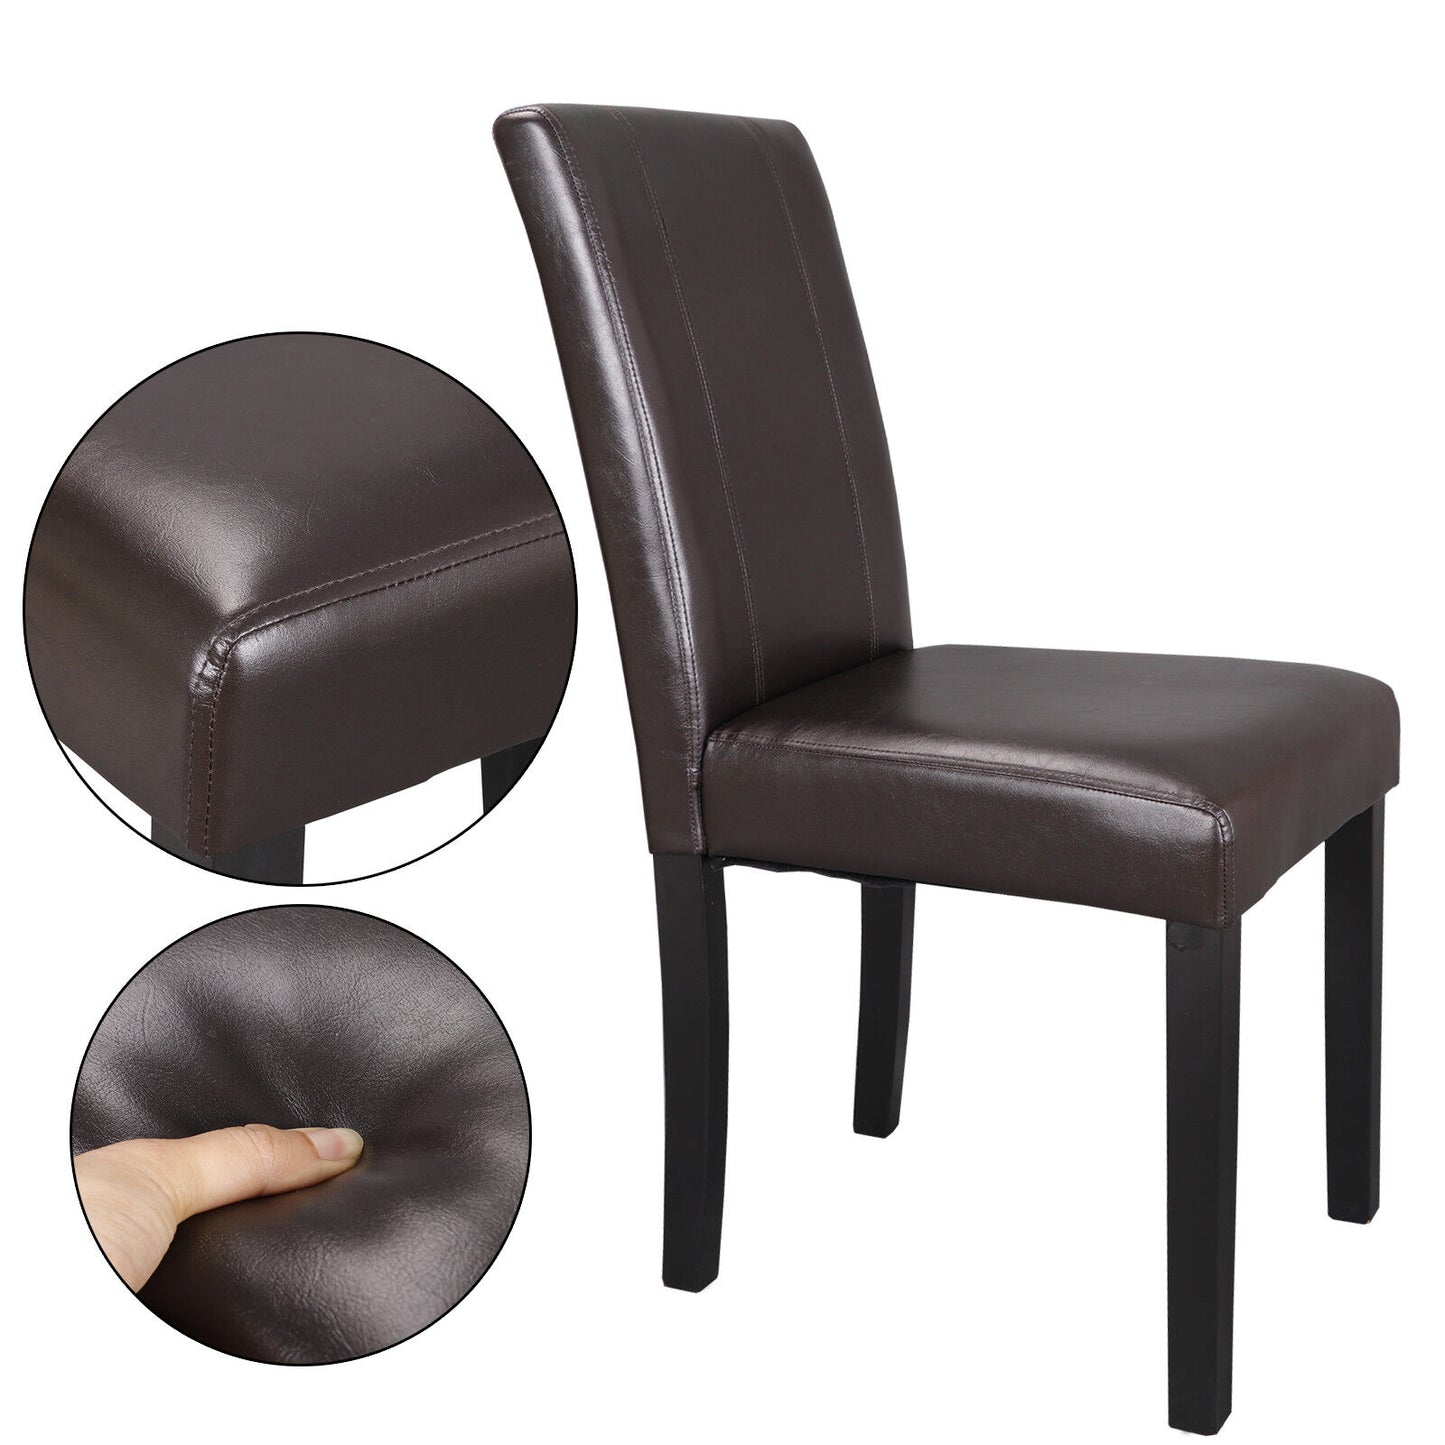 Dining Parson Room Chairs Kitchen Formal Elegant Leather Design 2 Set Brown